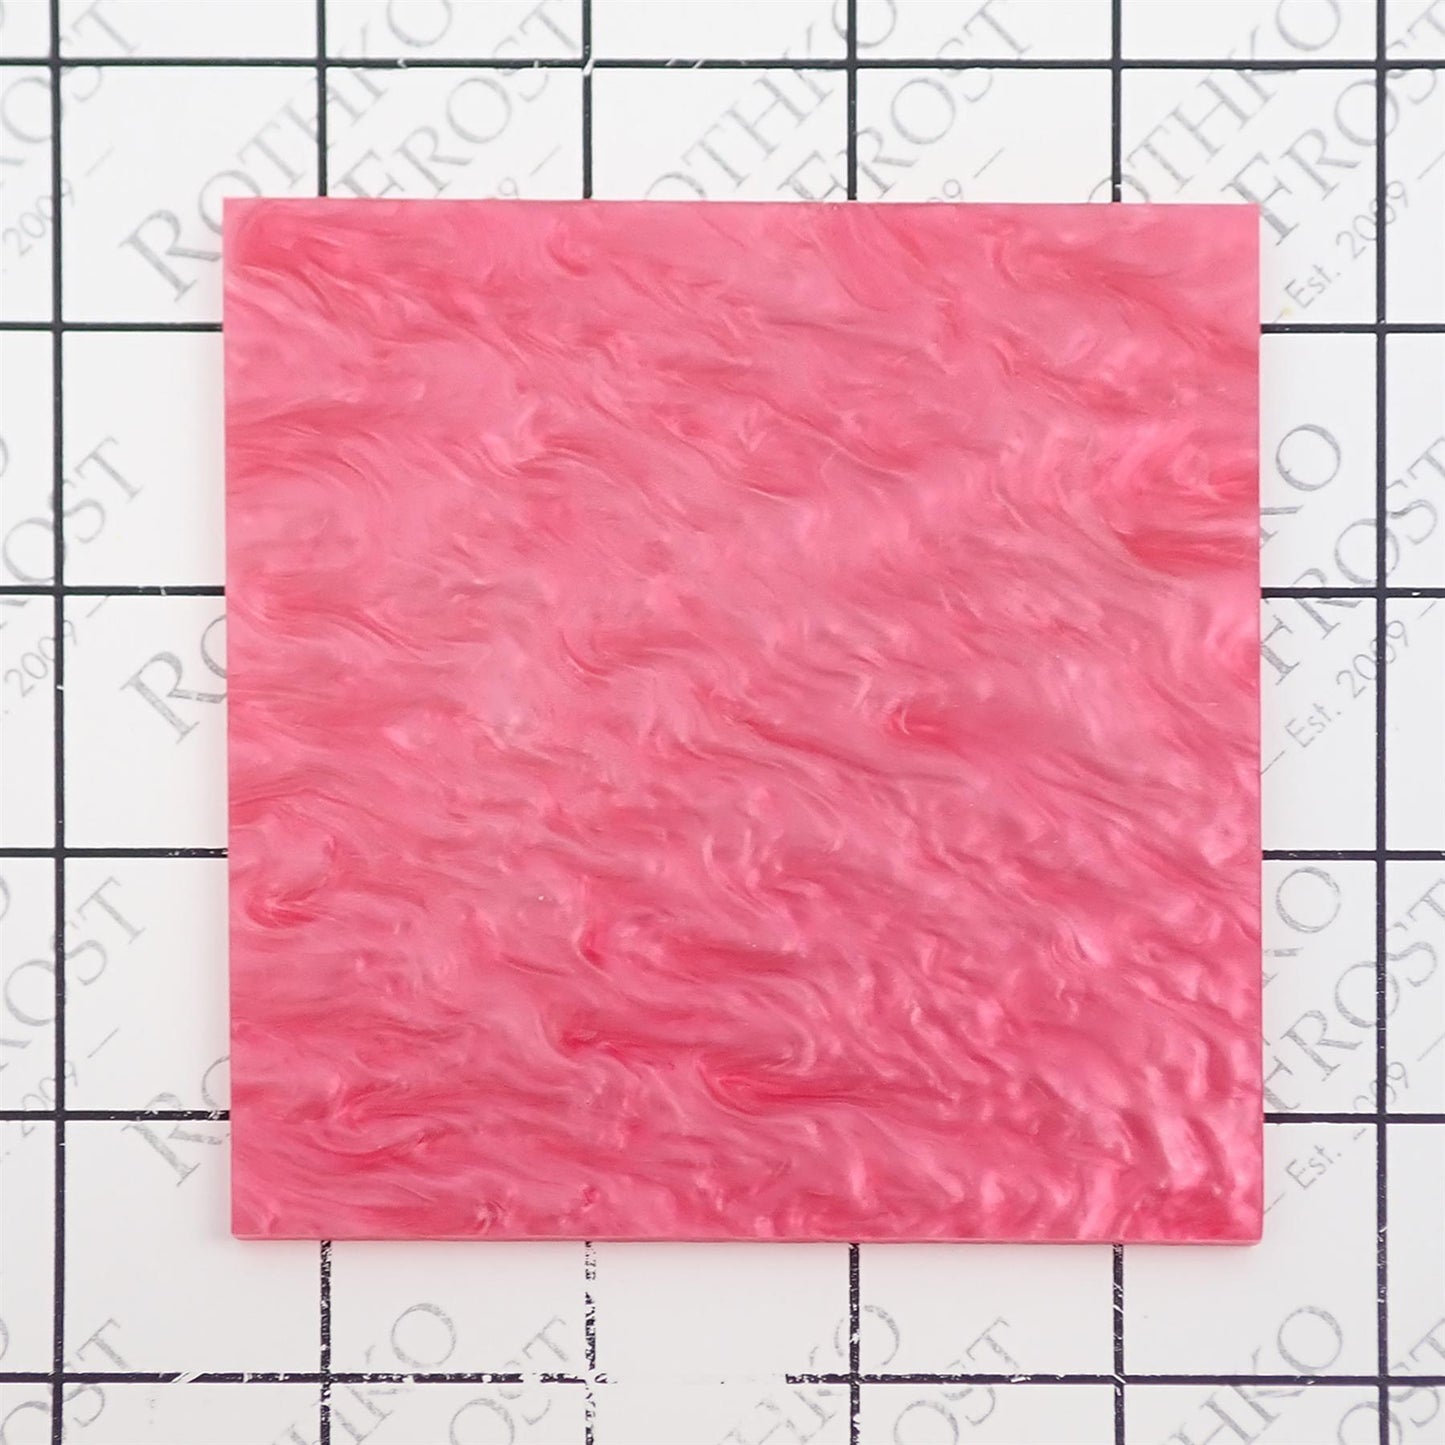 Incudo Pink Pearl Acrylic Sheet - 300x200x3mm (11.8x7.87x0.12")